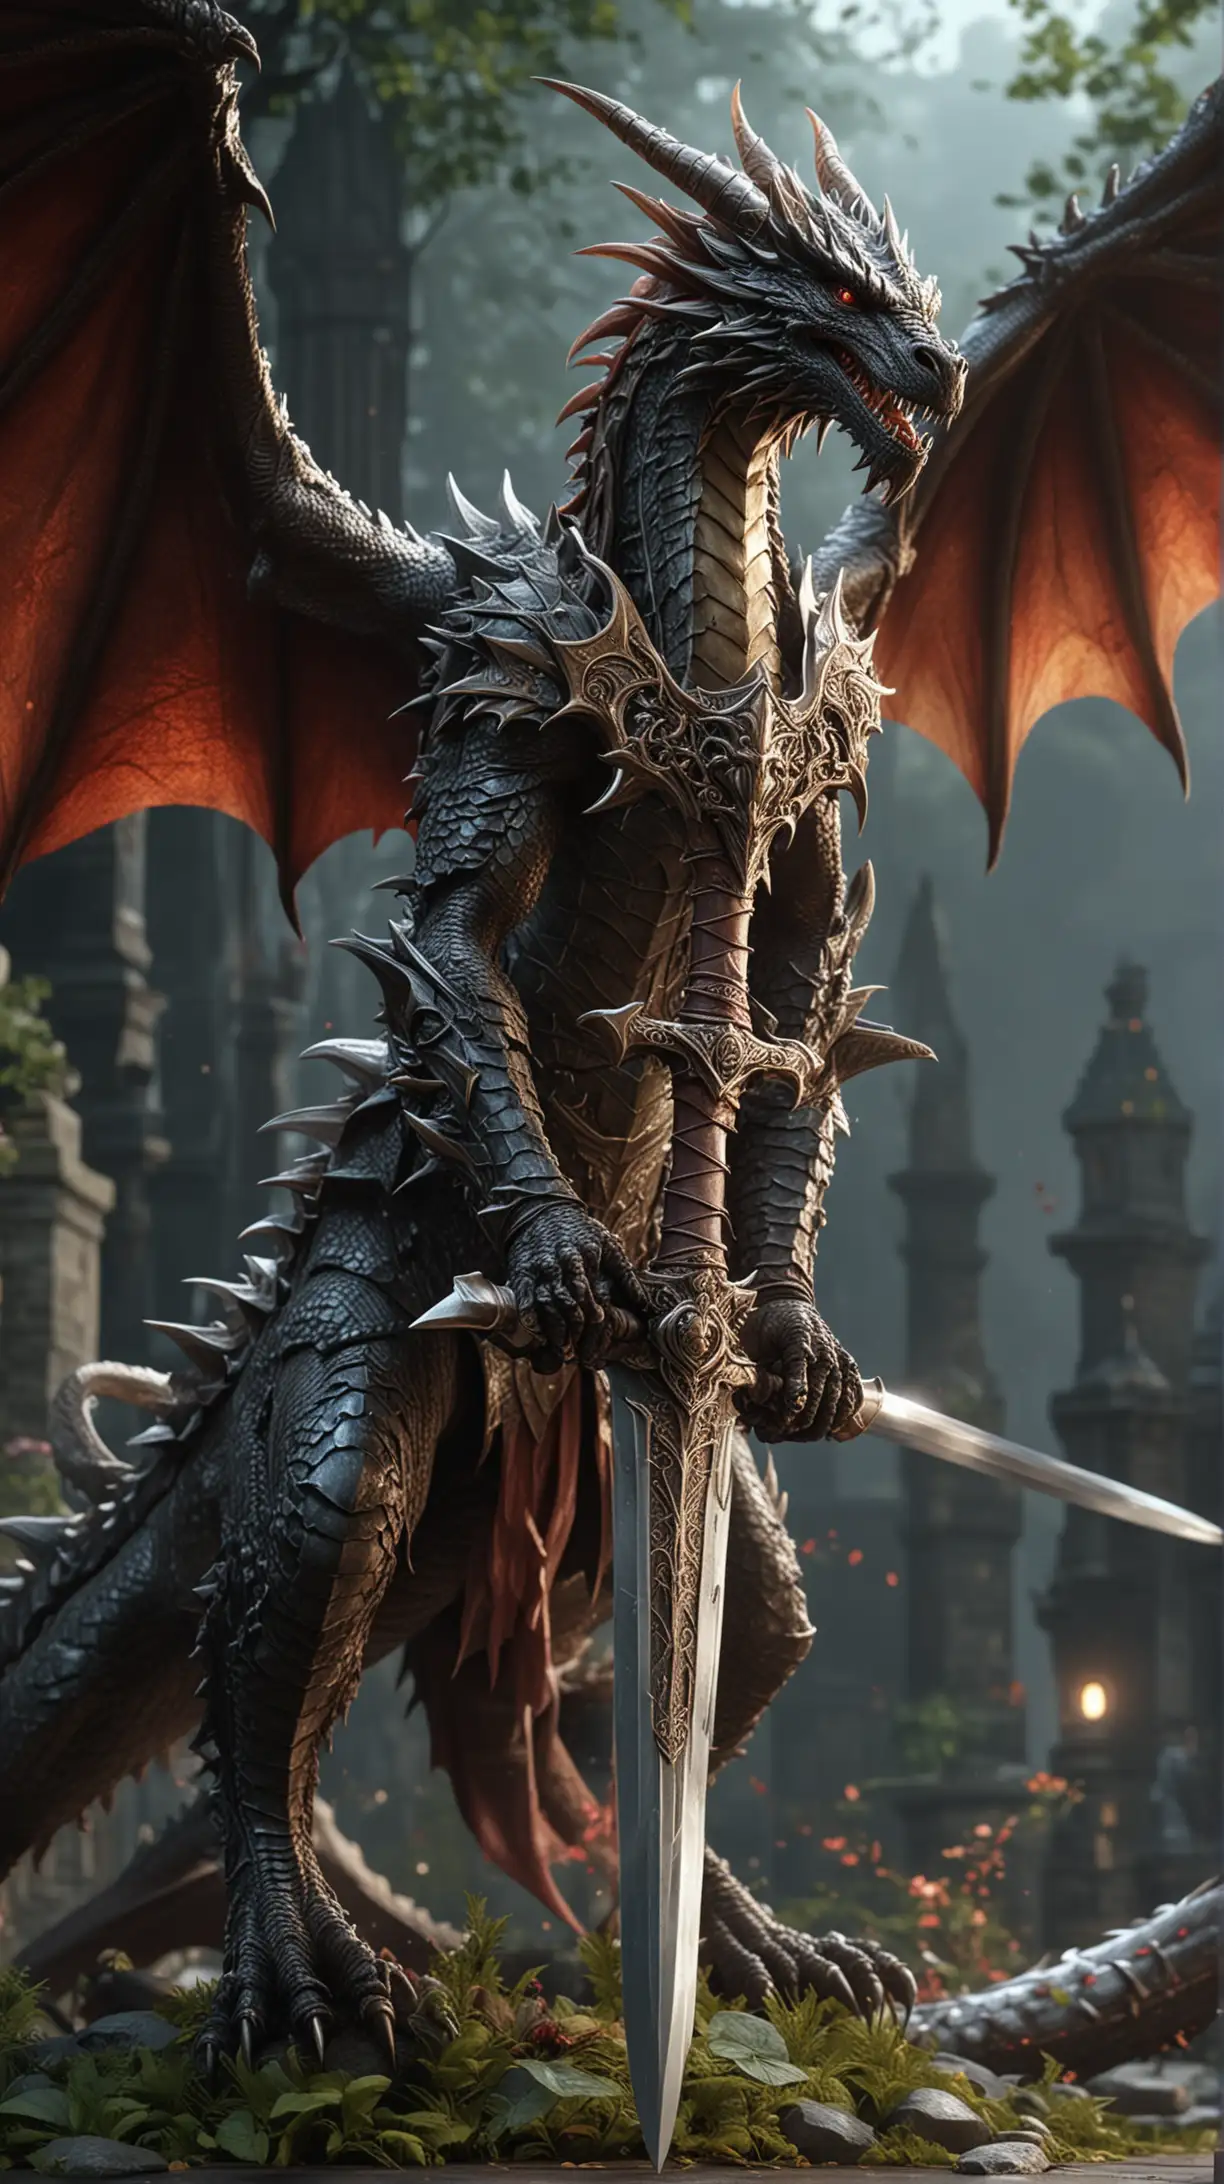 Majestic Dragon Guarding a Sword Hyperrealistic Anne Stokes Style Art in 8K Ultra HD